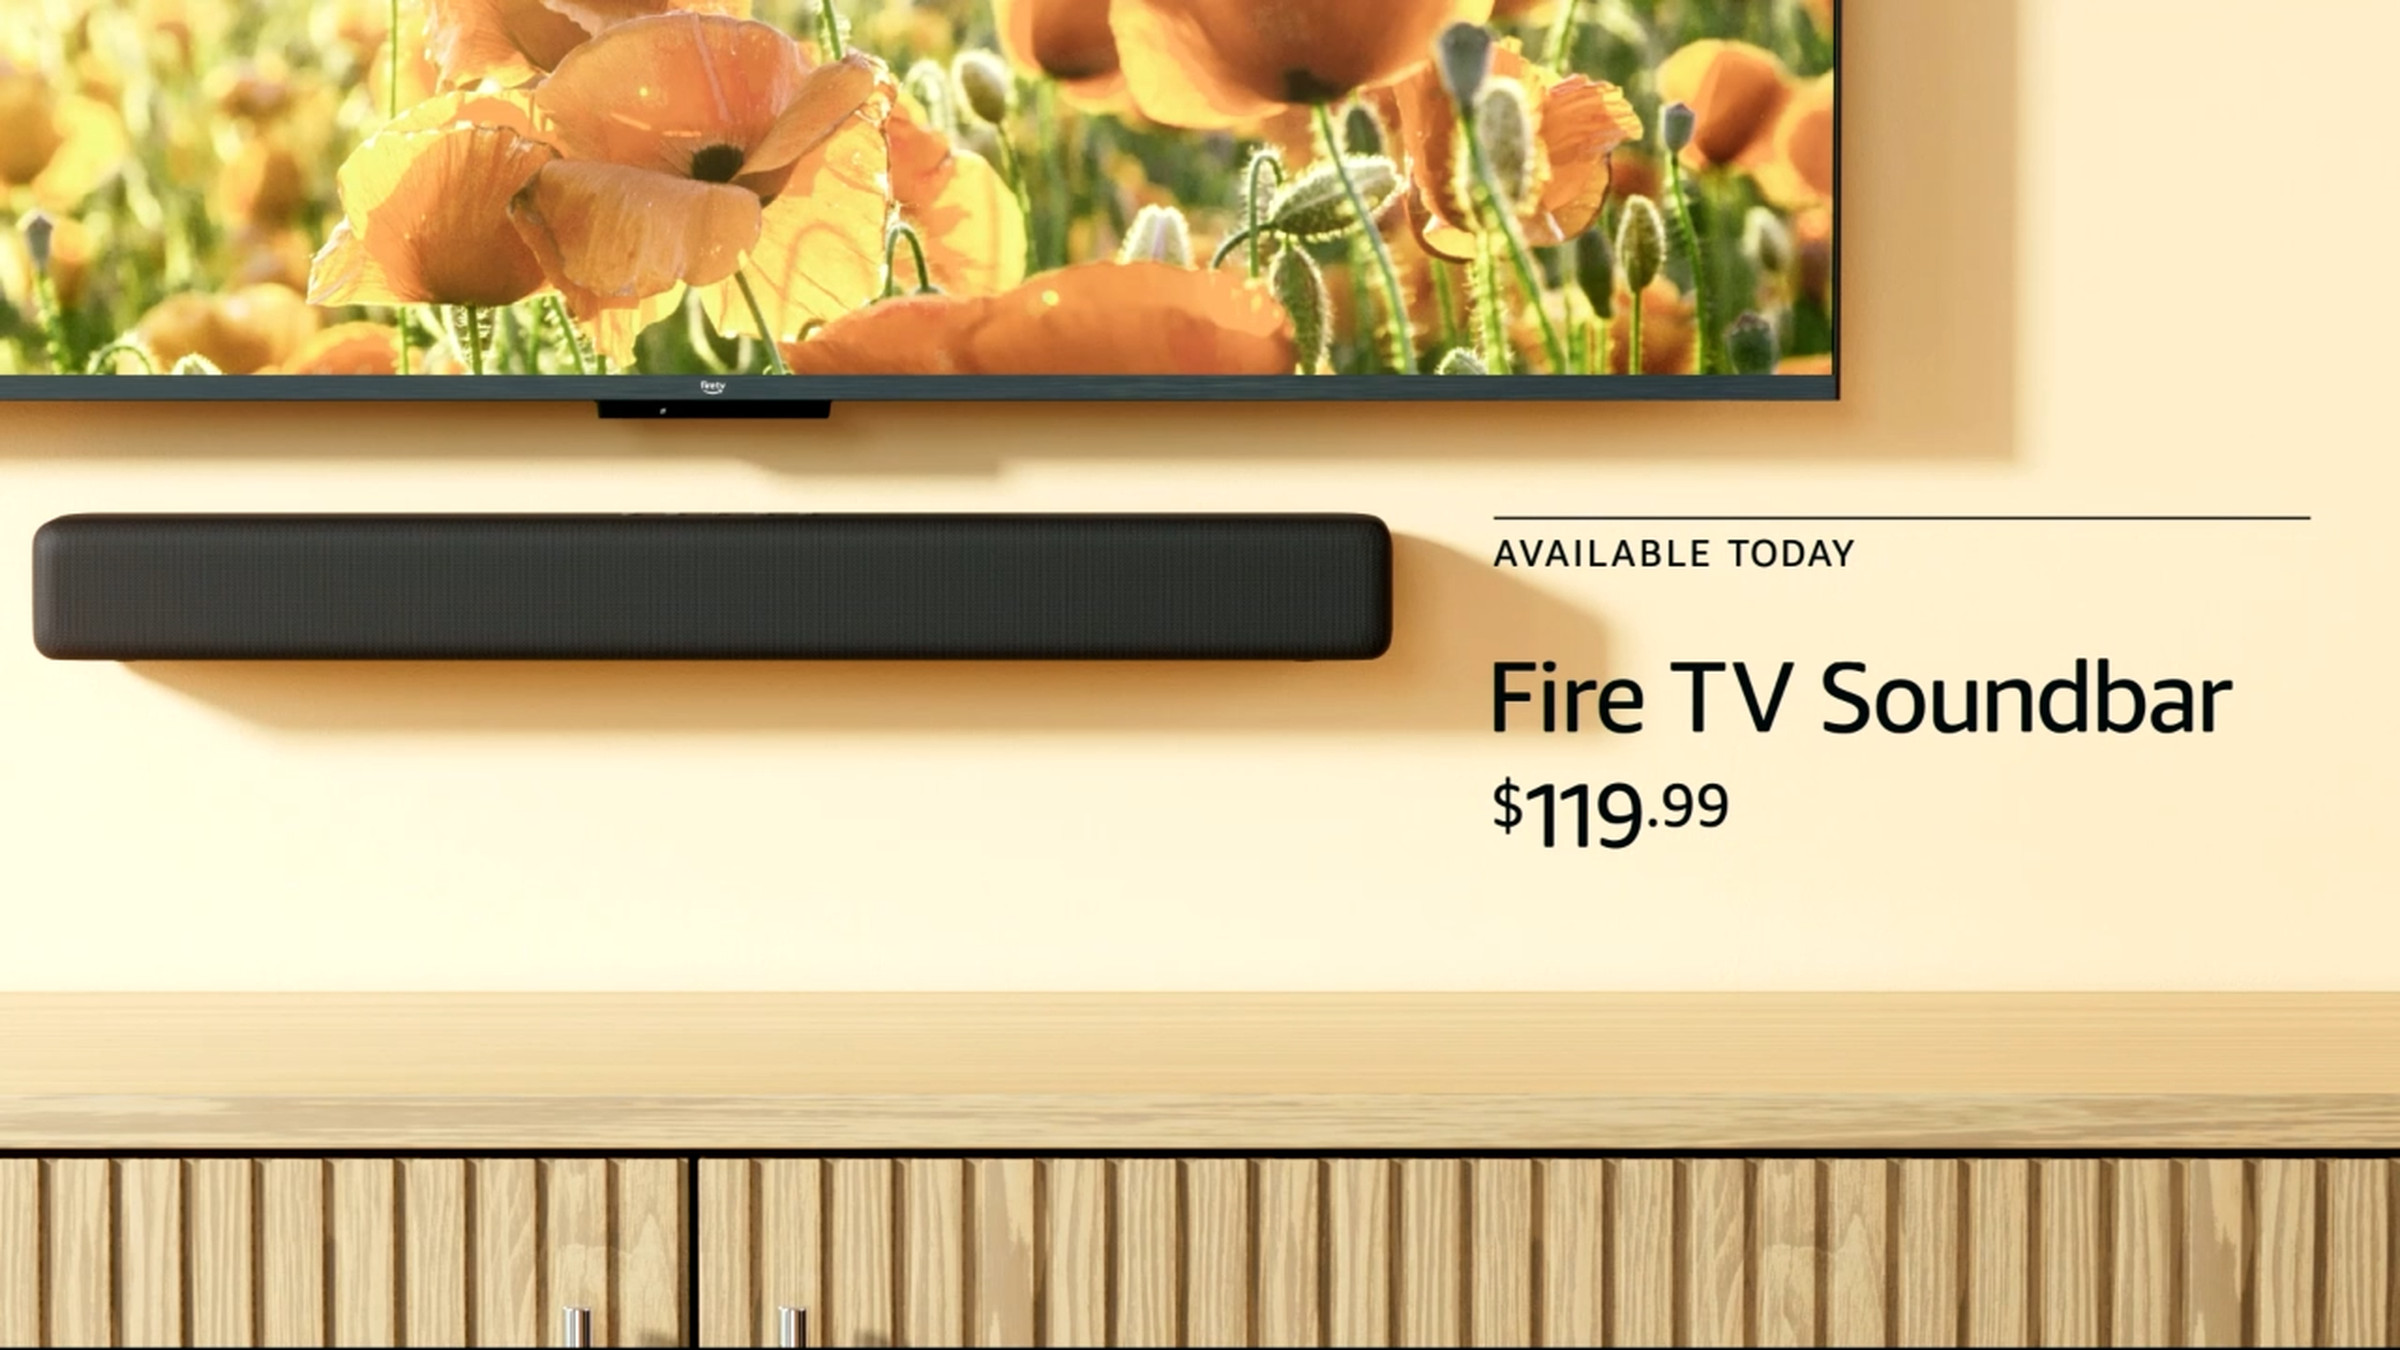 The Fire TV Soundbar